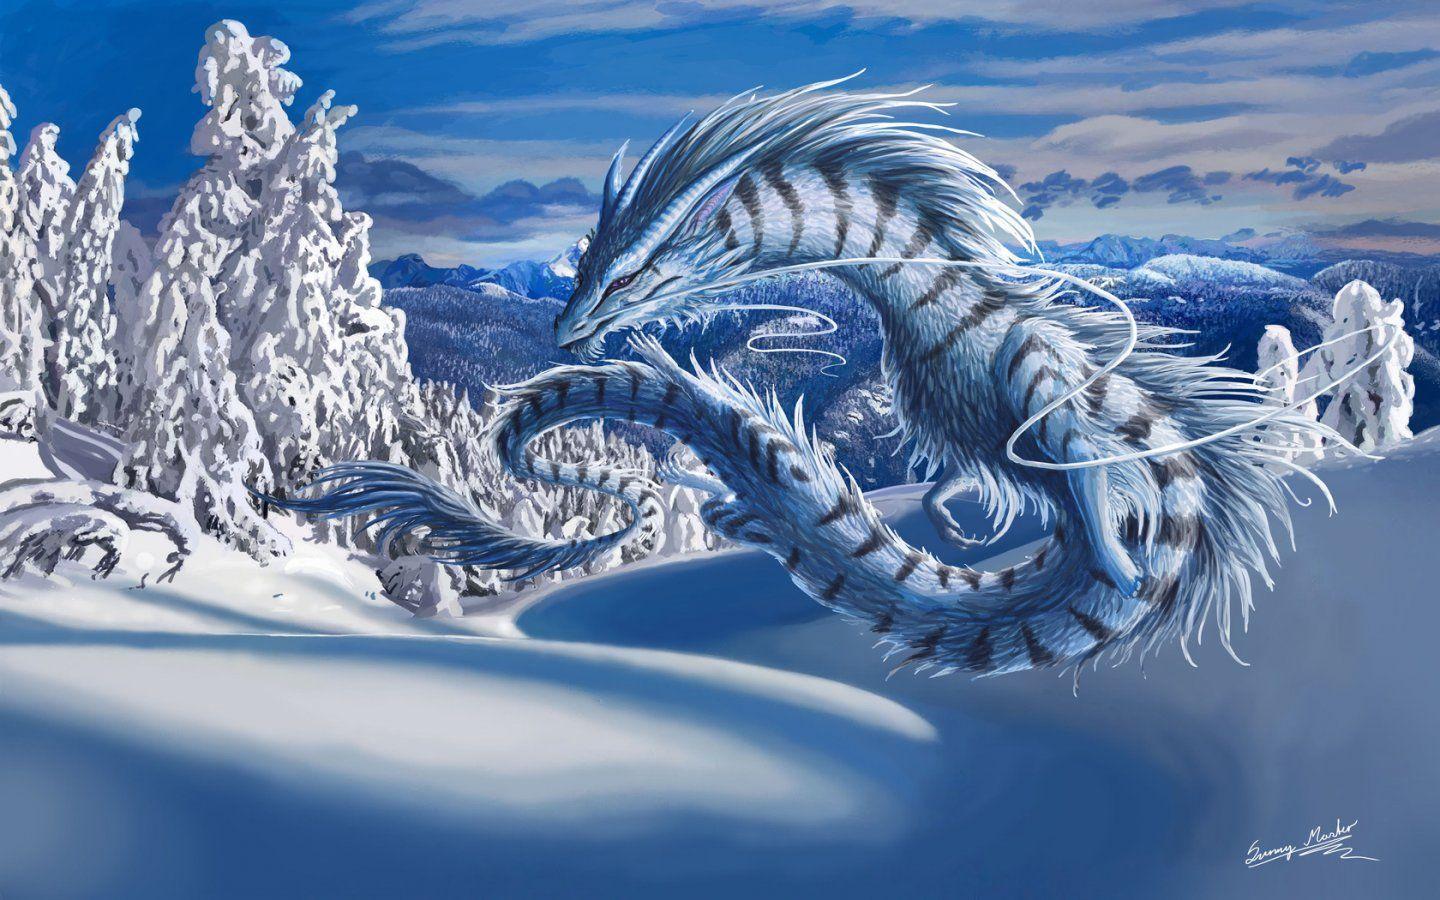 Ice Dragon Computer Wallpapers, Desktop Backgrounds 1440x900 Id